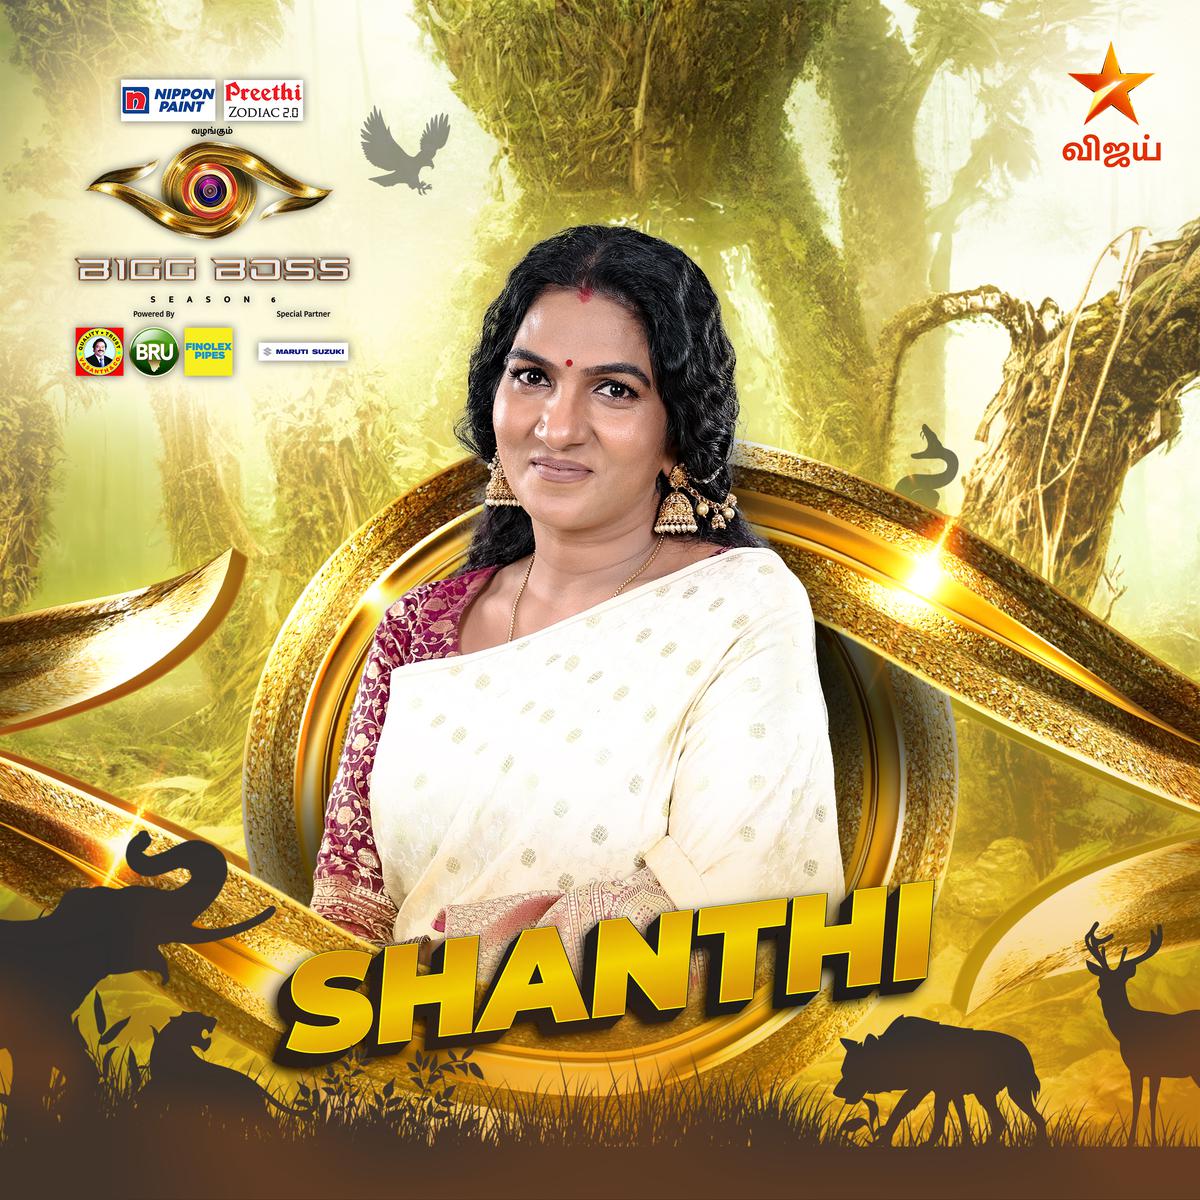 Tamil6sex Videos - Bigg Boss Tamil' Season 6: Here is the full list of contestants - The Hindu